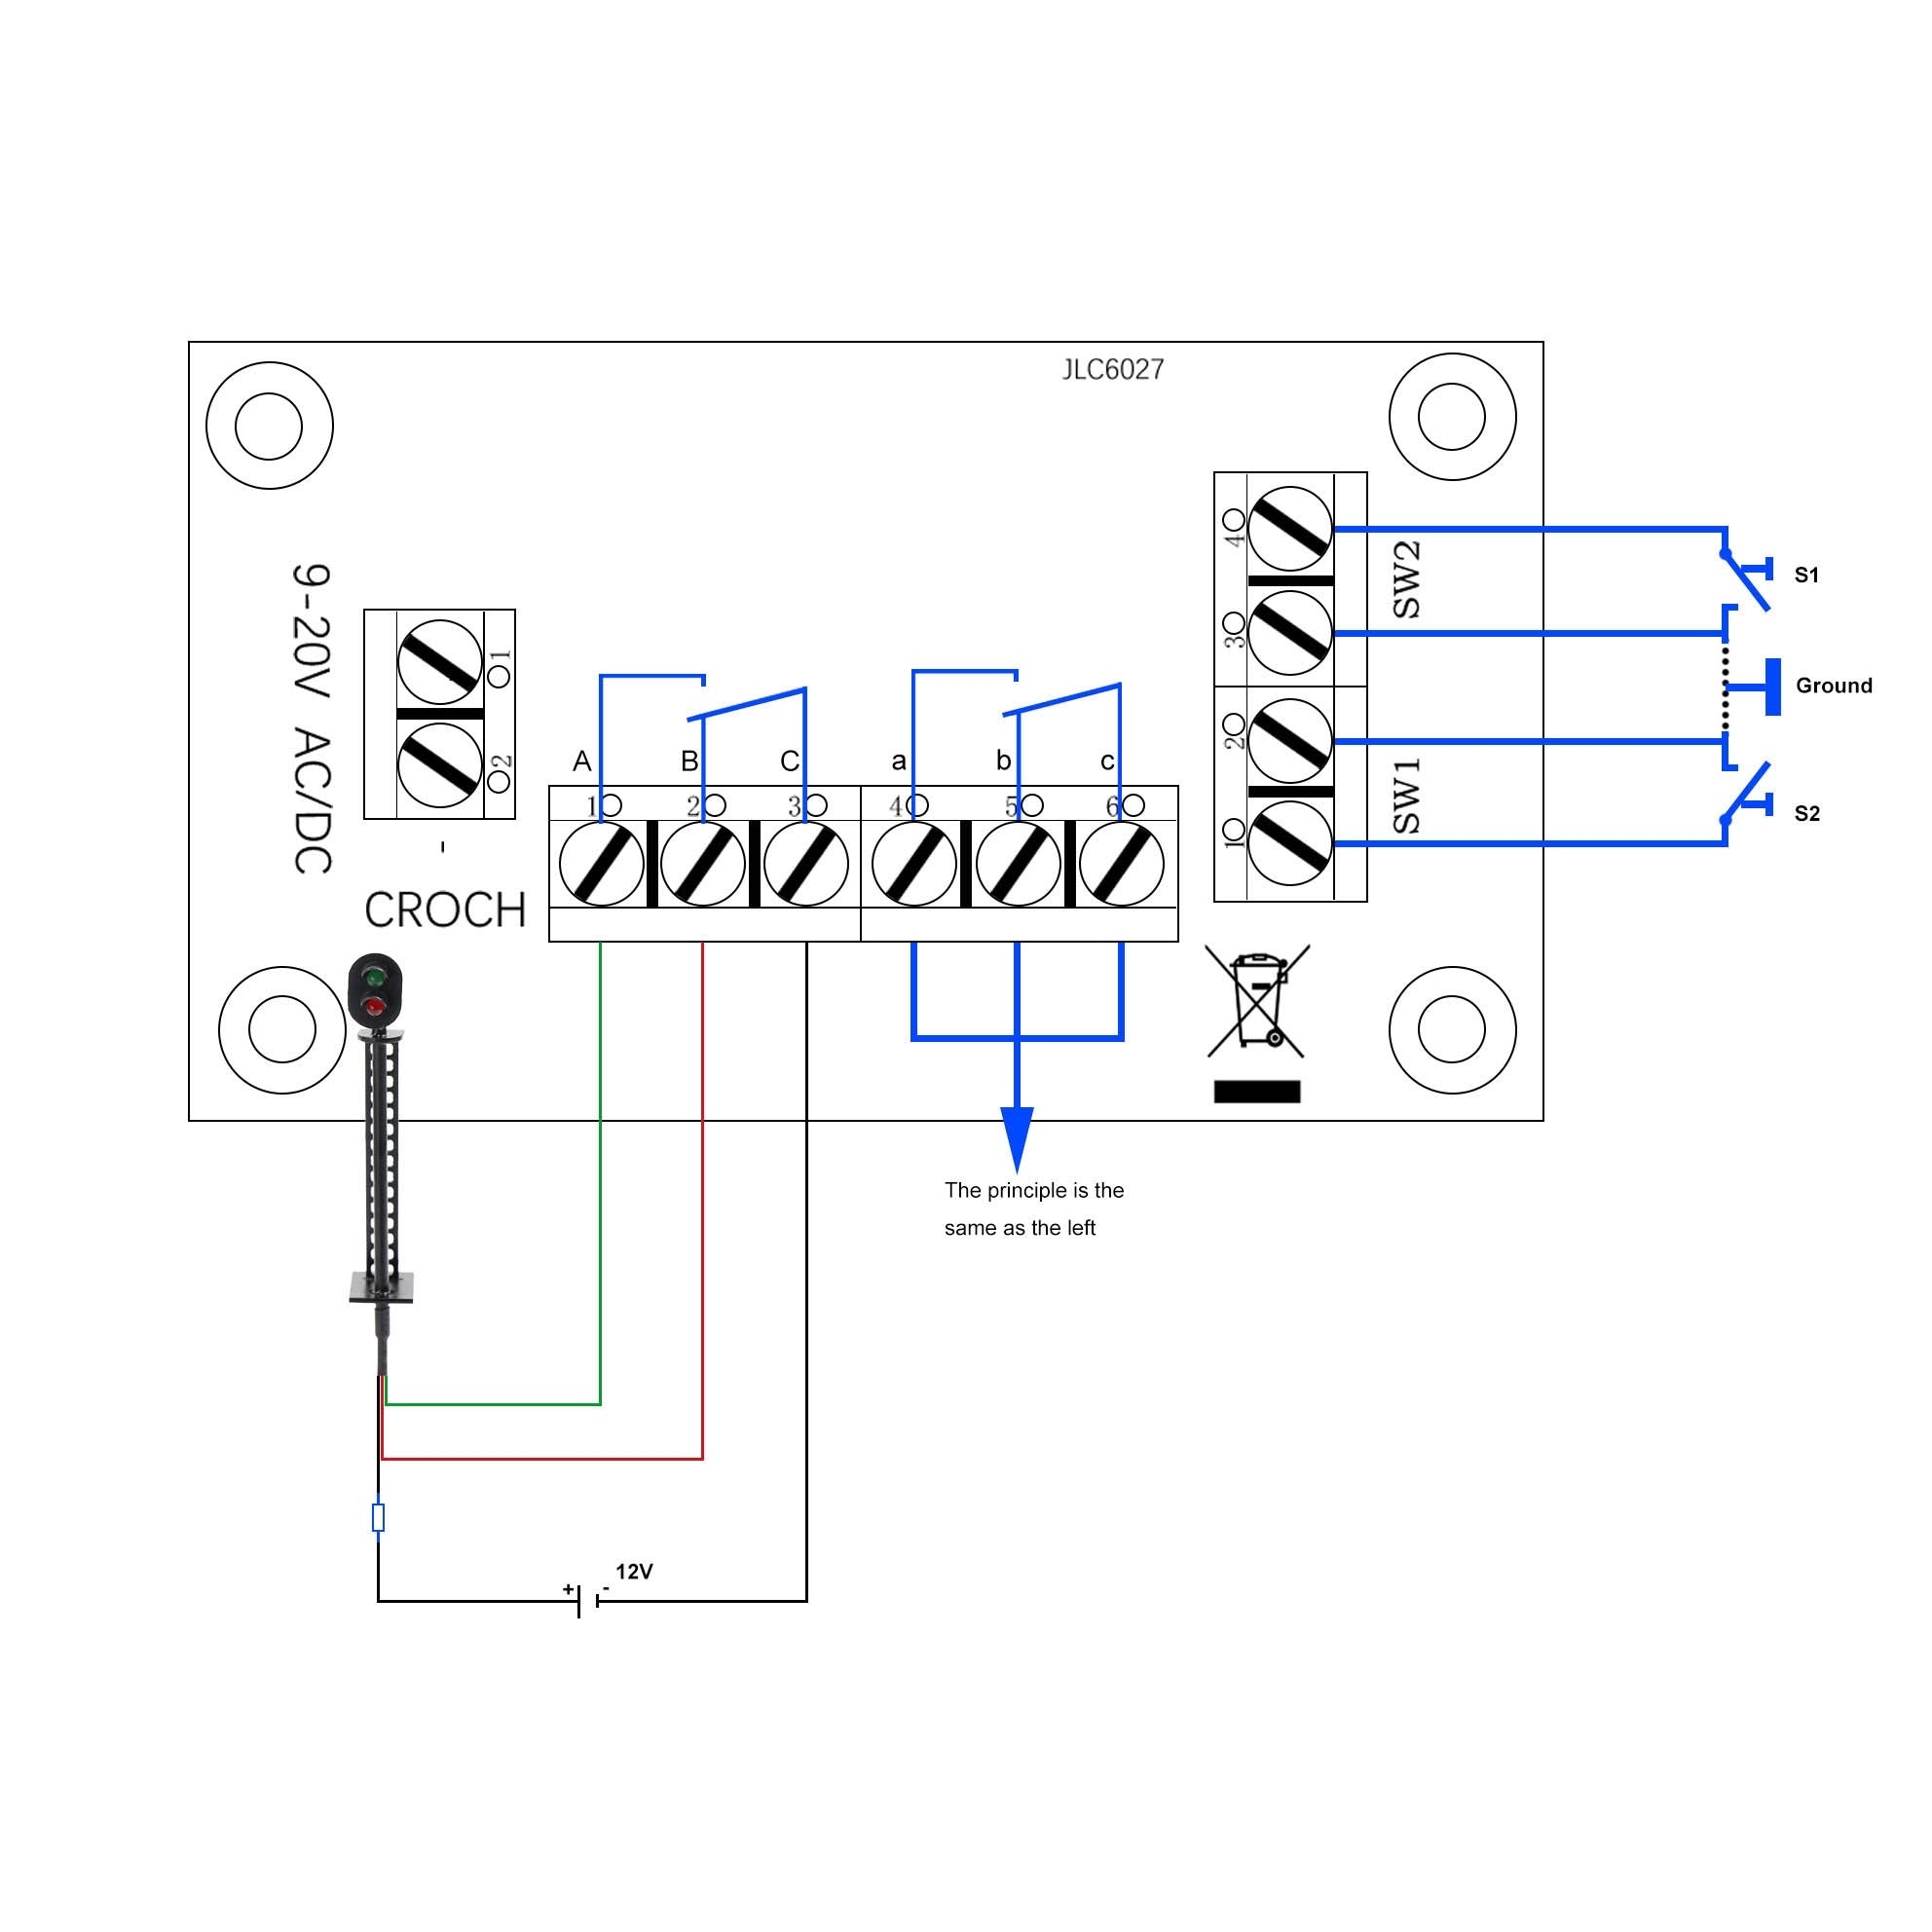 PCB009 1 Set Power Distribution Board Distributor to Flash Traffic Signal